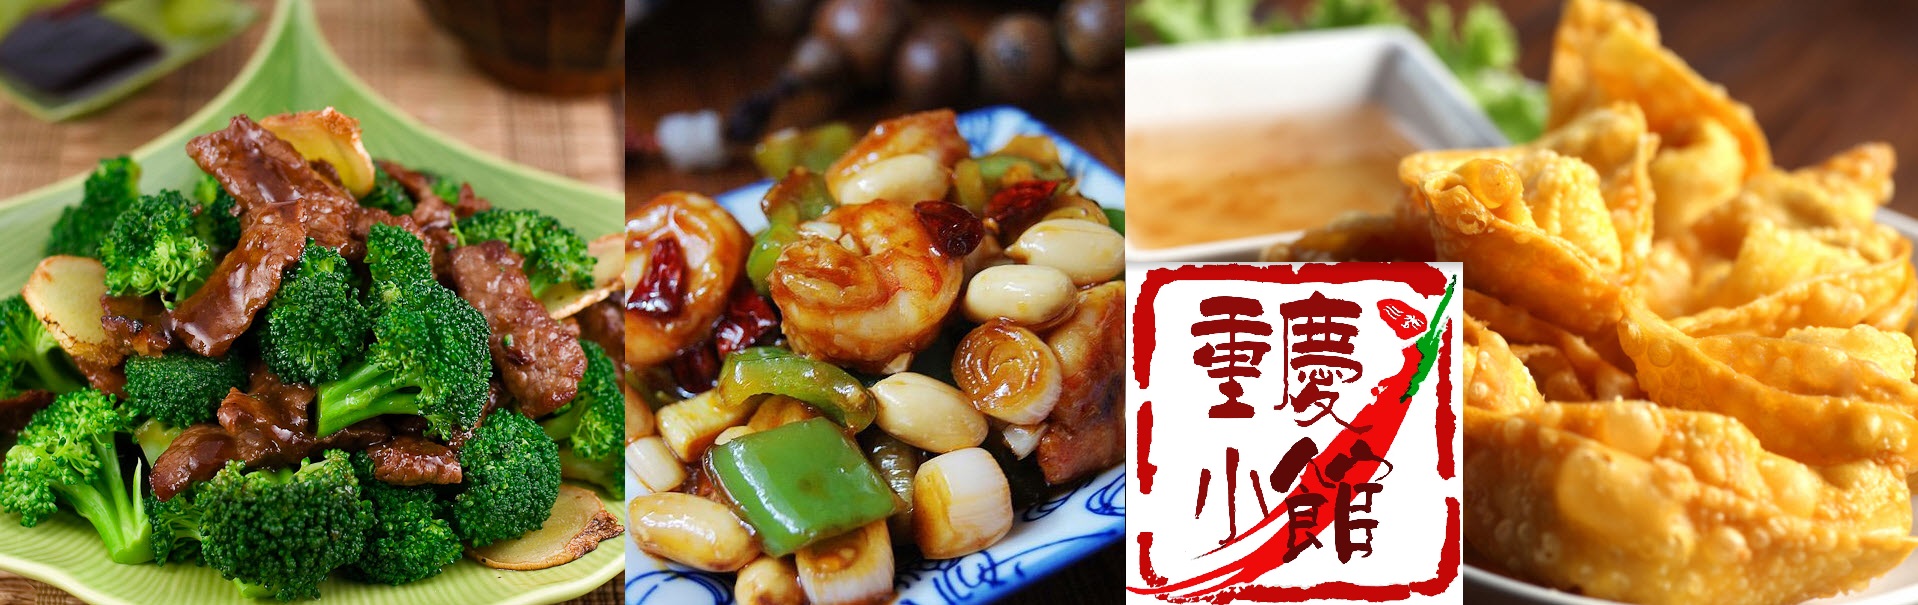 Your favorite Chinese food atGourmet China Chinese